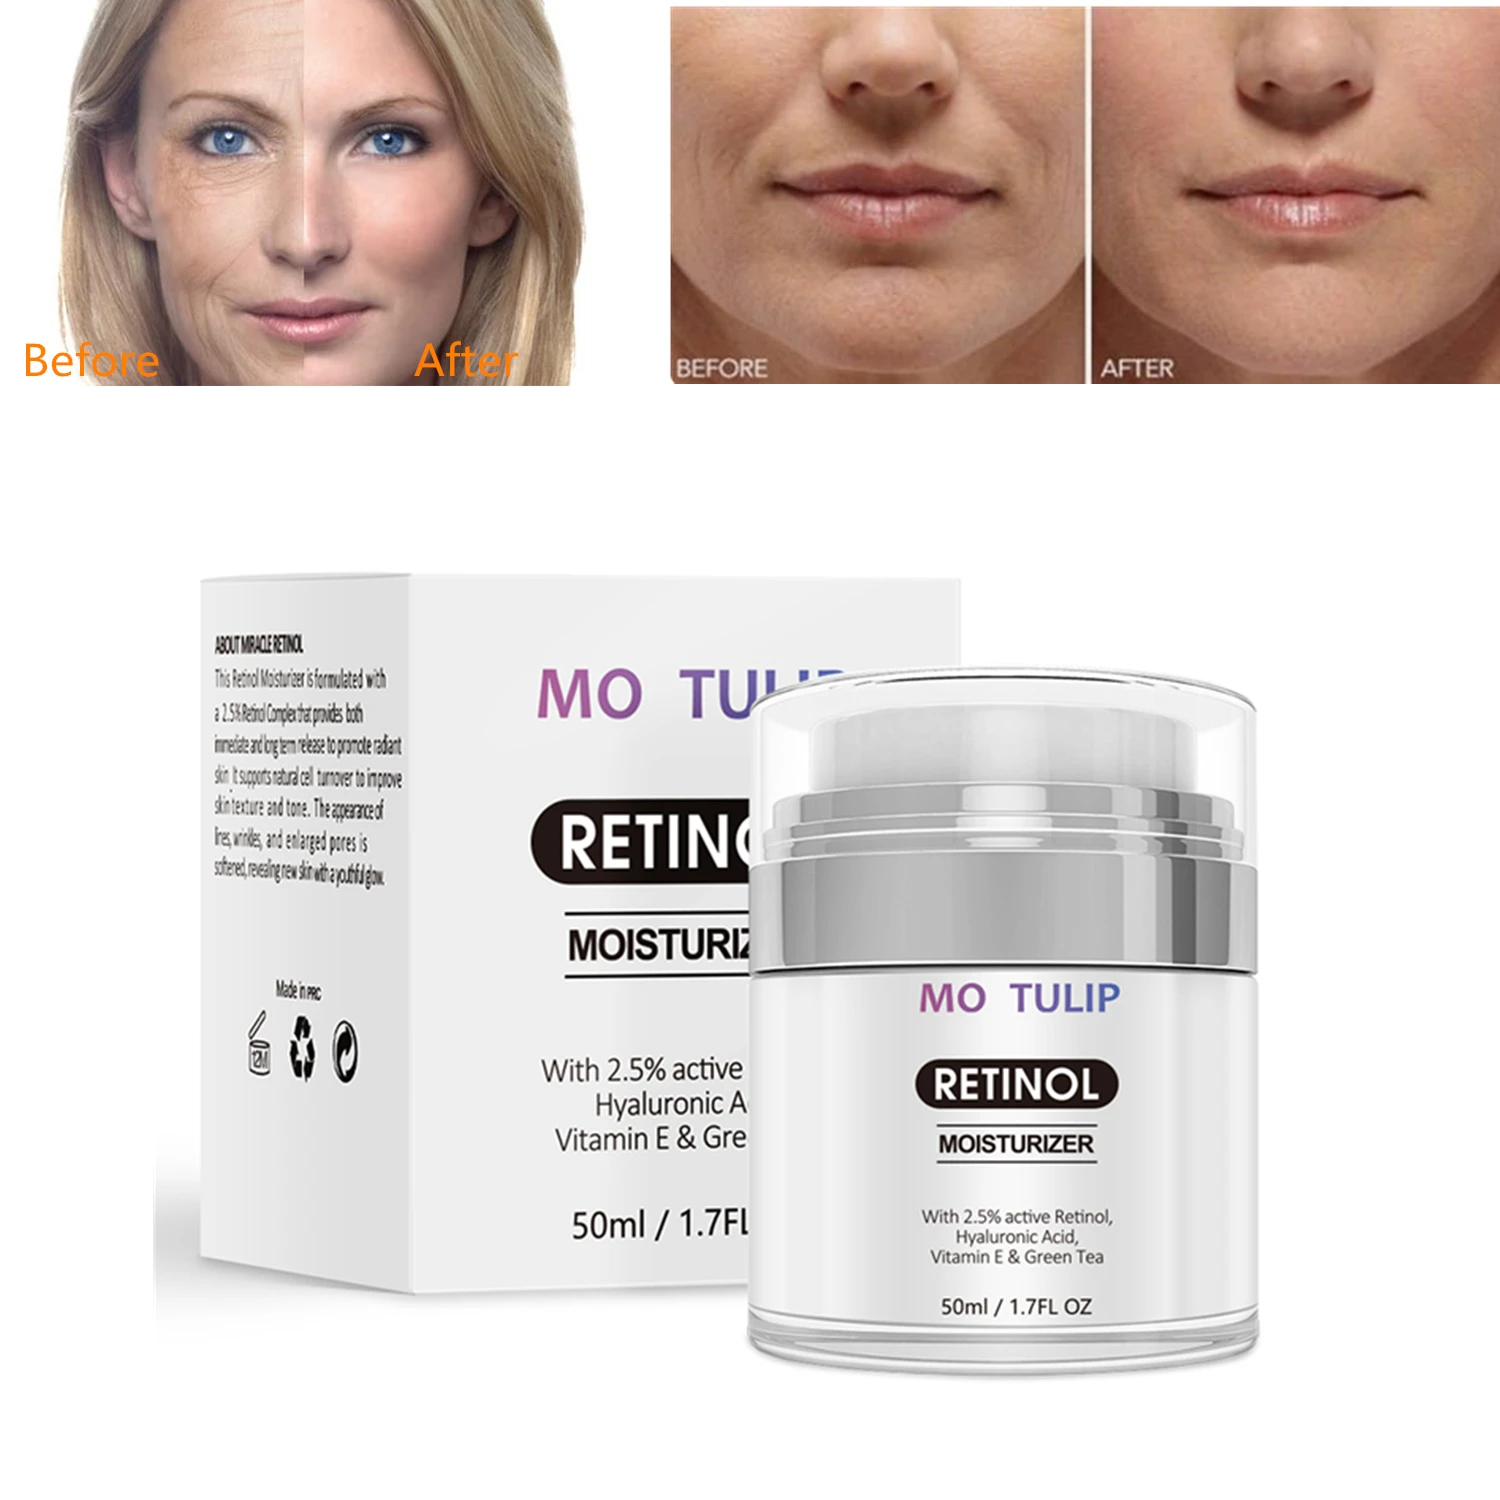 

2.5% Retinol Moisturizing Cream Anti Aging and Reduces Wrinkles and Fine Lines Day and Night Retinol Cream Skincare Moisturizer